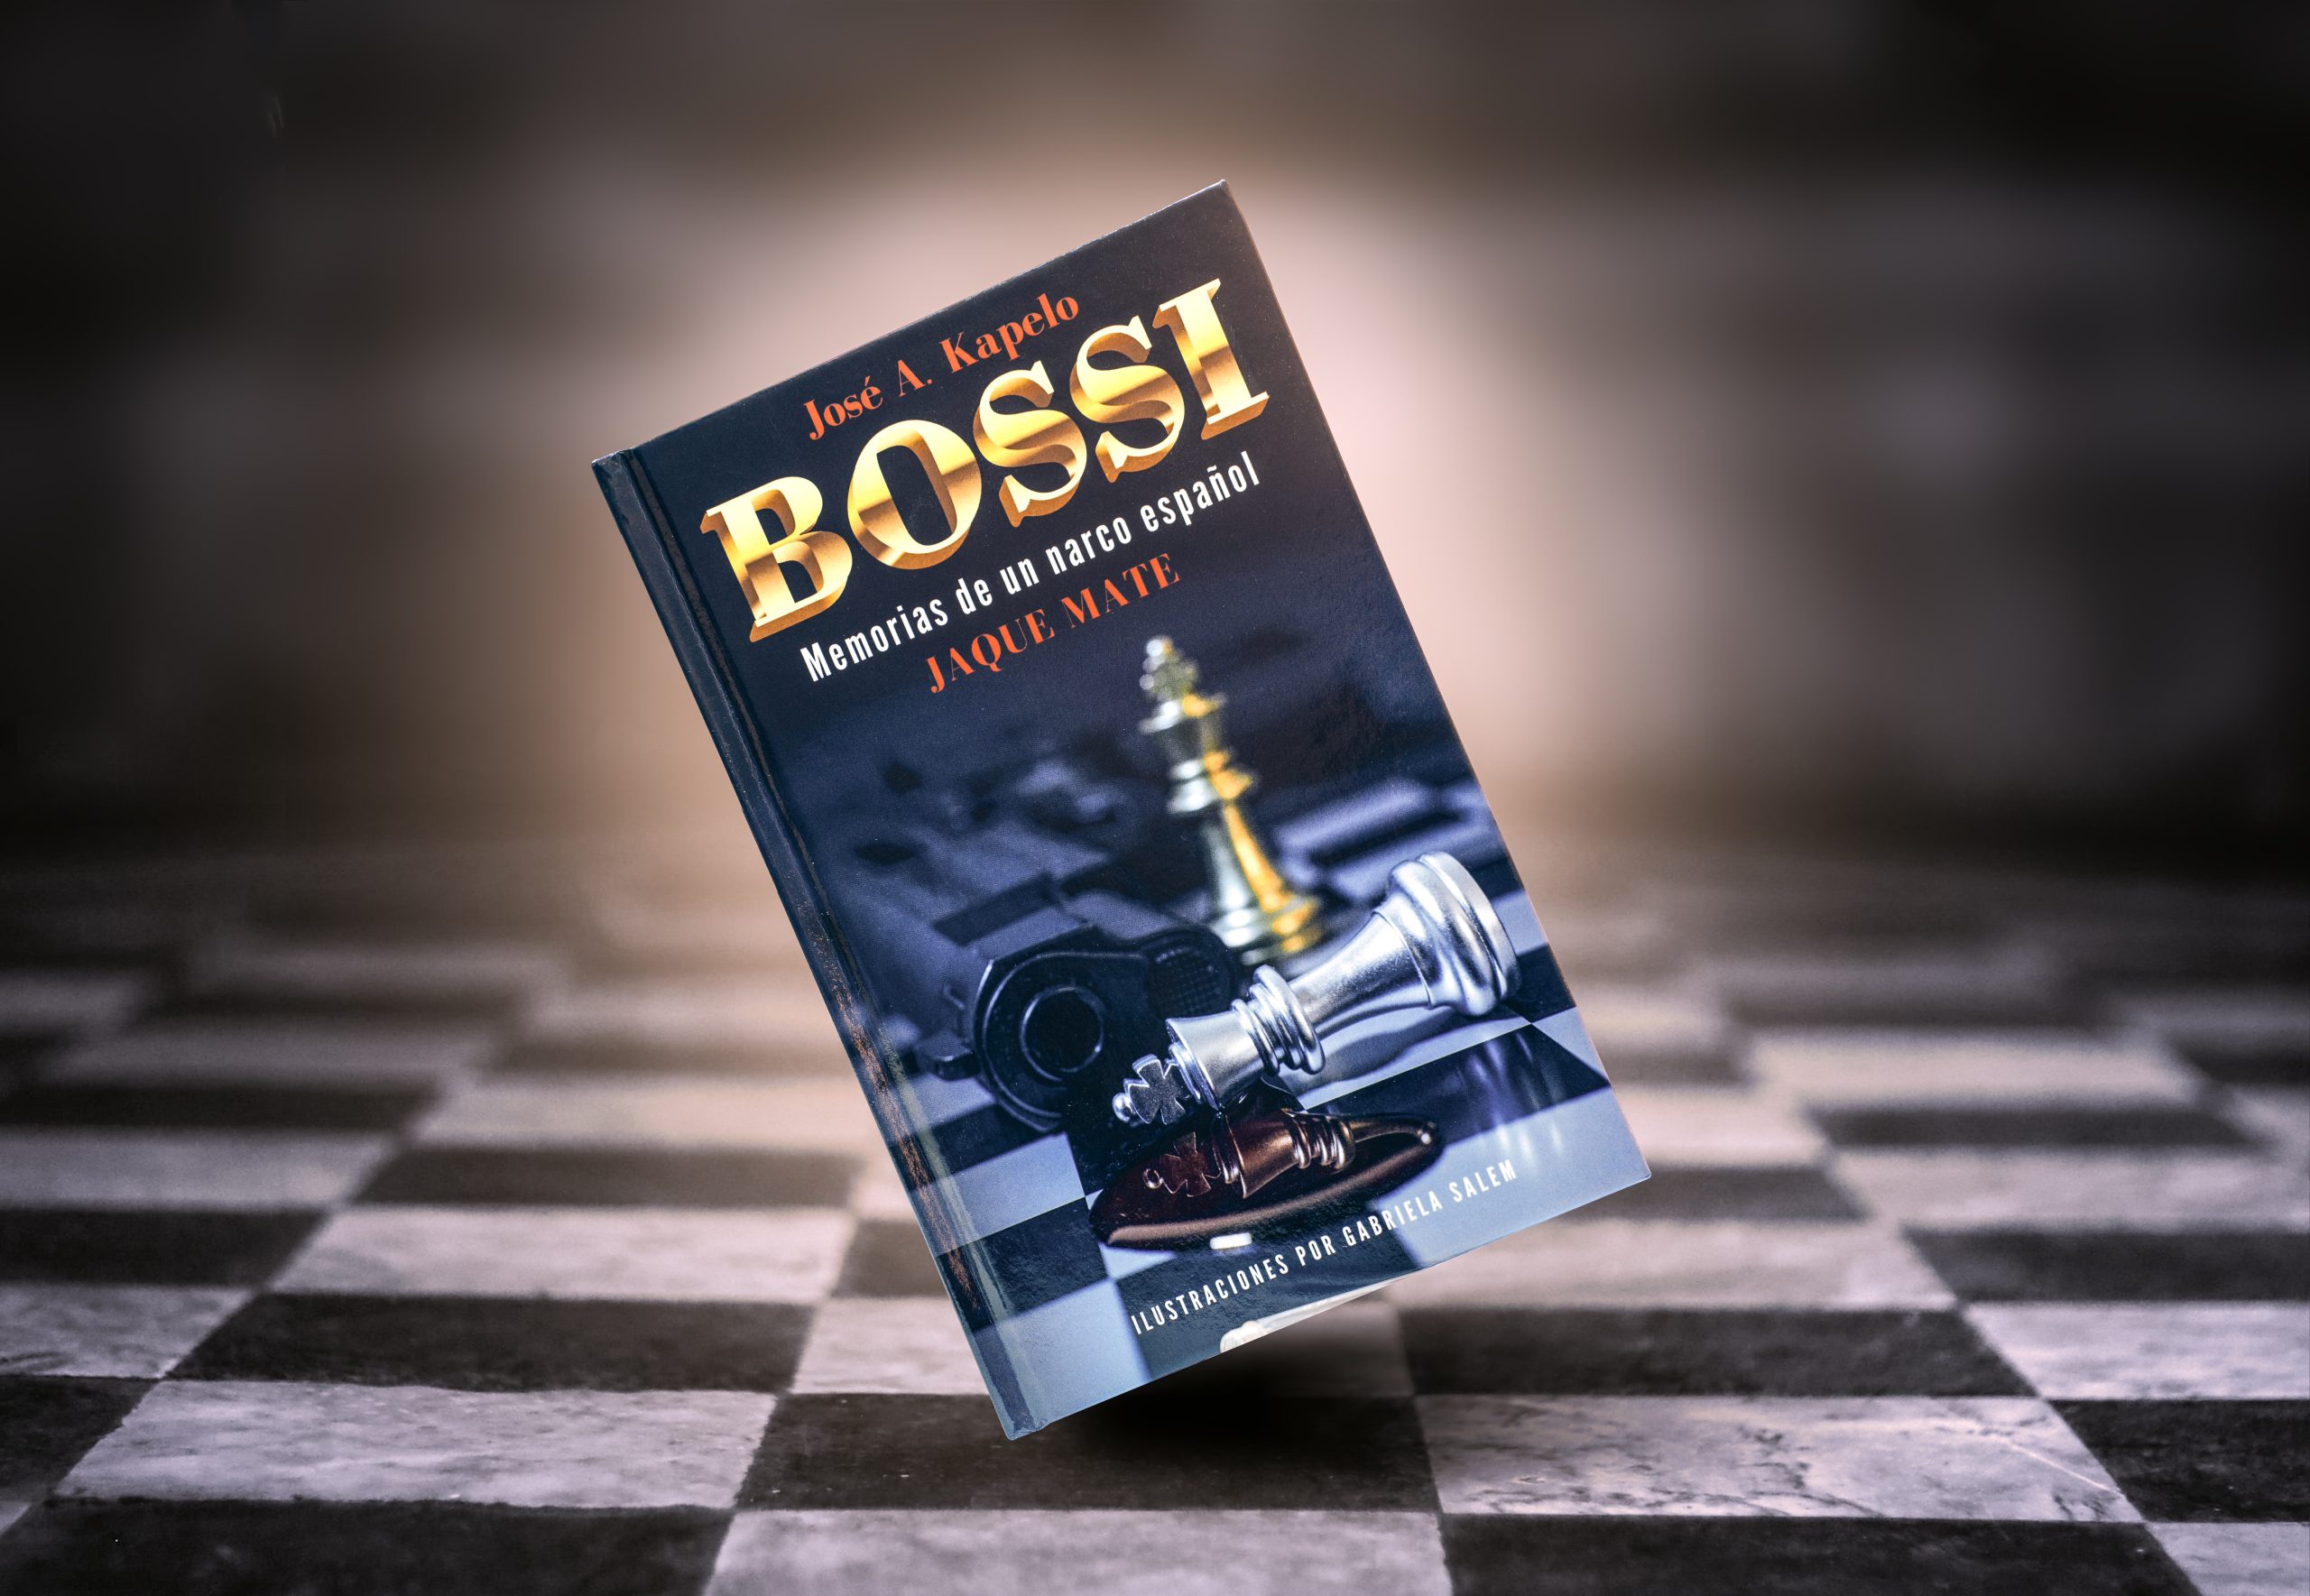 Reseña de “Bossi, memorias de un narco español. Jaque Mate”, de José A. Kapelo | Por Nuria Bellido